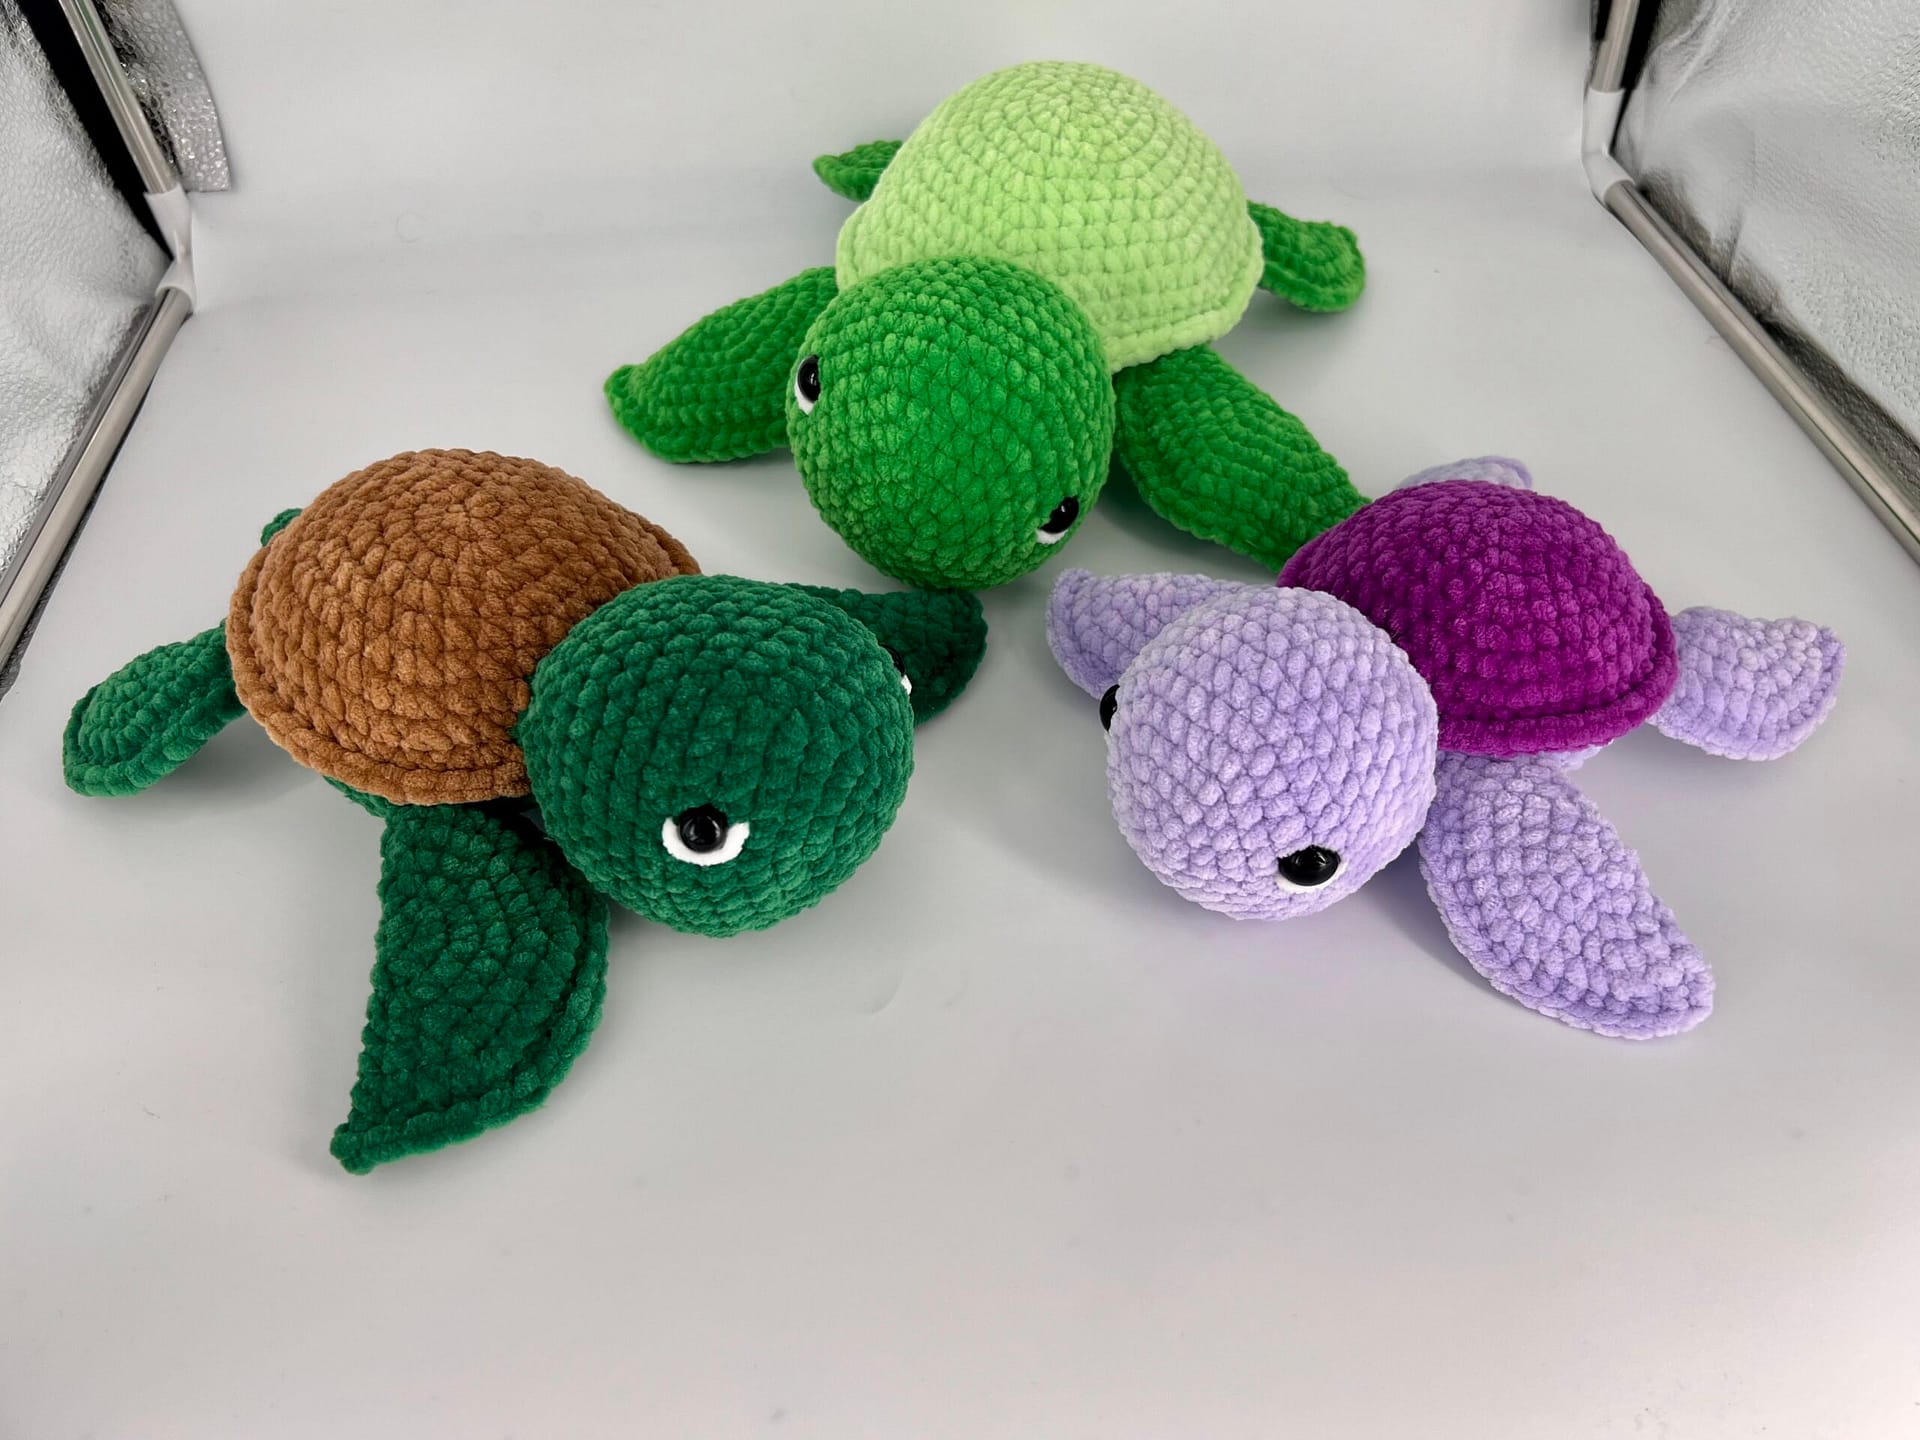 Turtle crochet plush - 9.5 in/24cm - soft yarn amigurumi